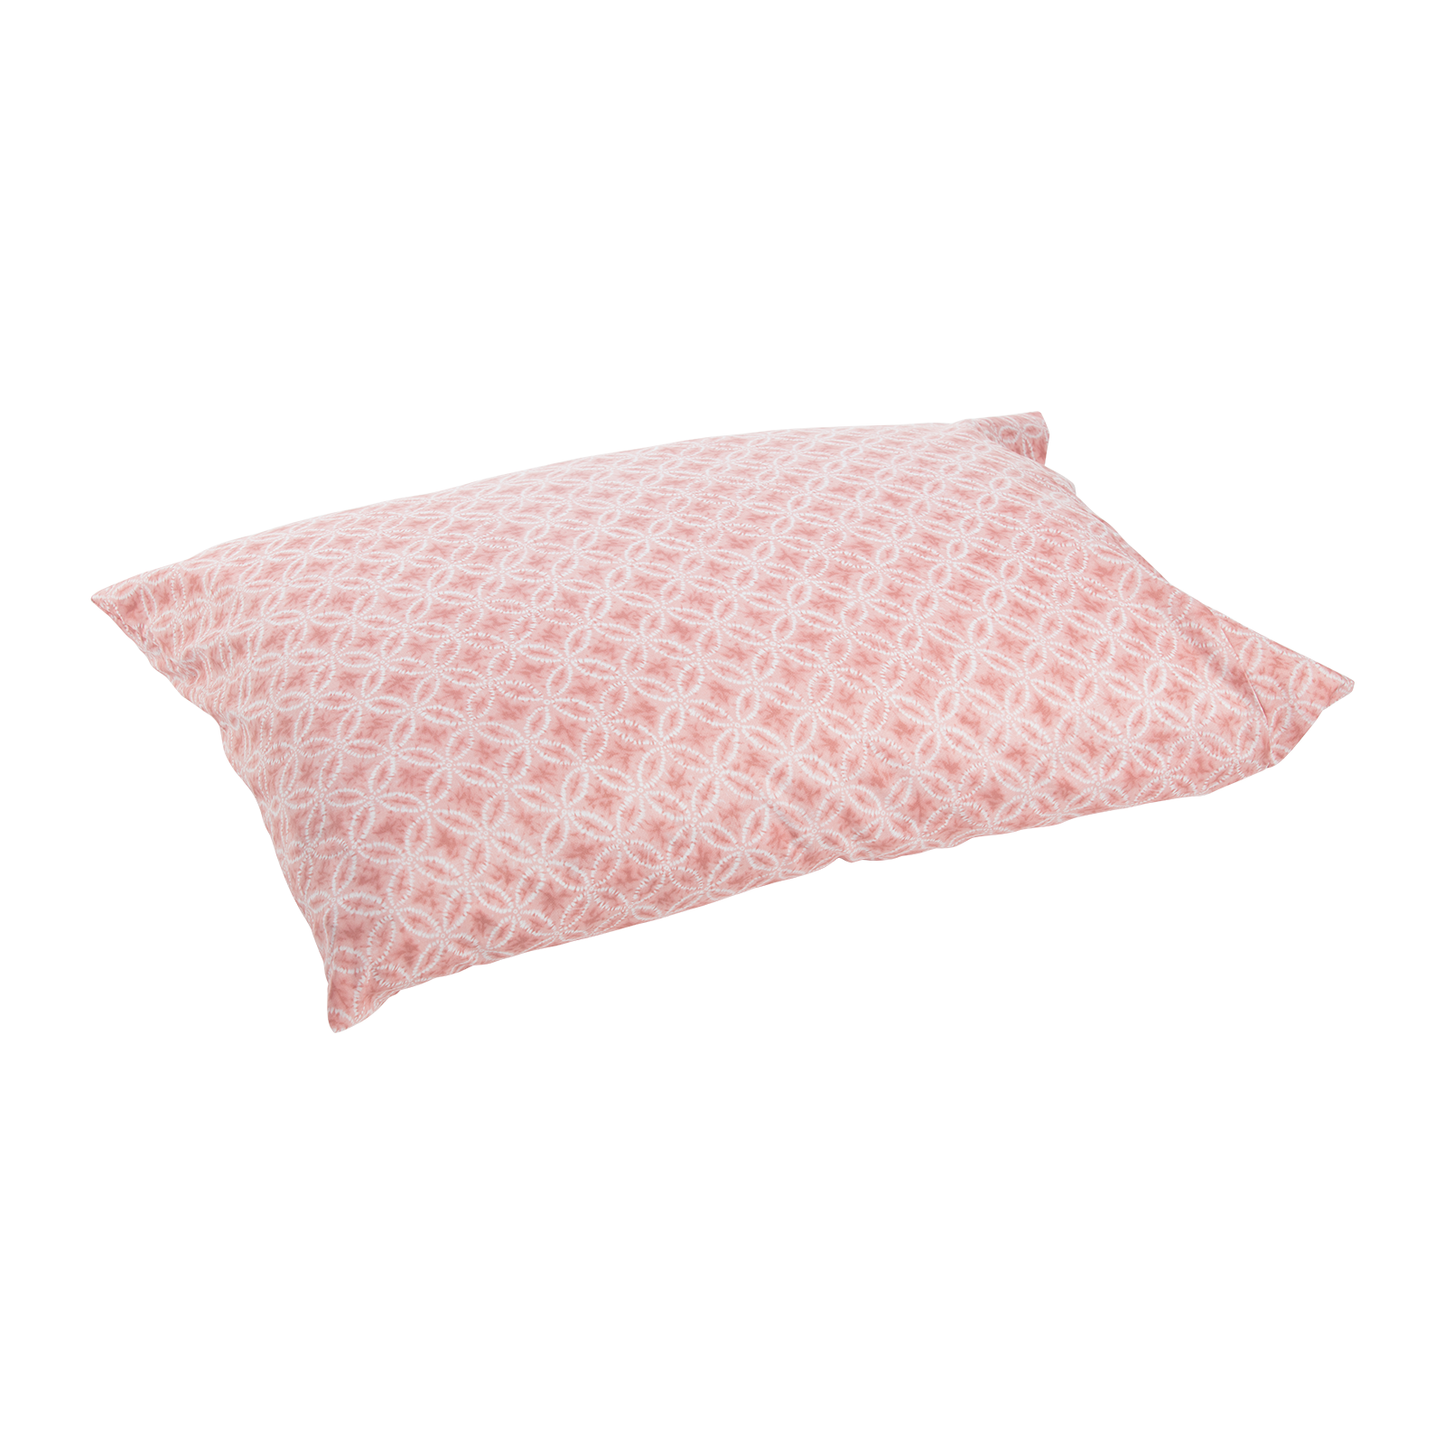 J-Life Taidai Pink Pillowcase_Pillows & Shams